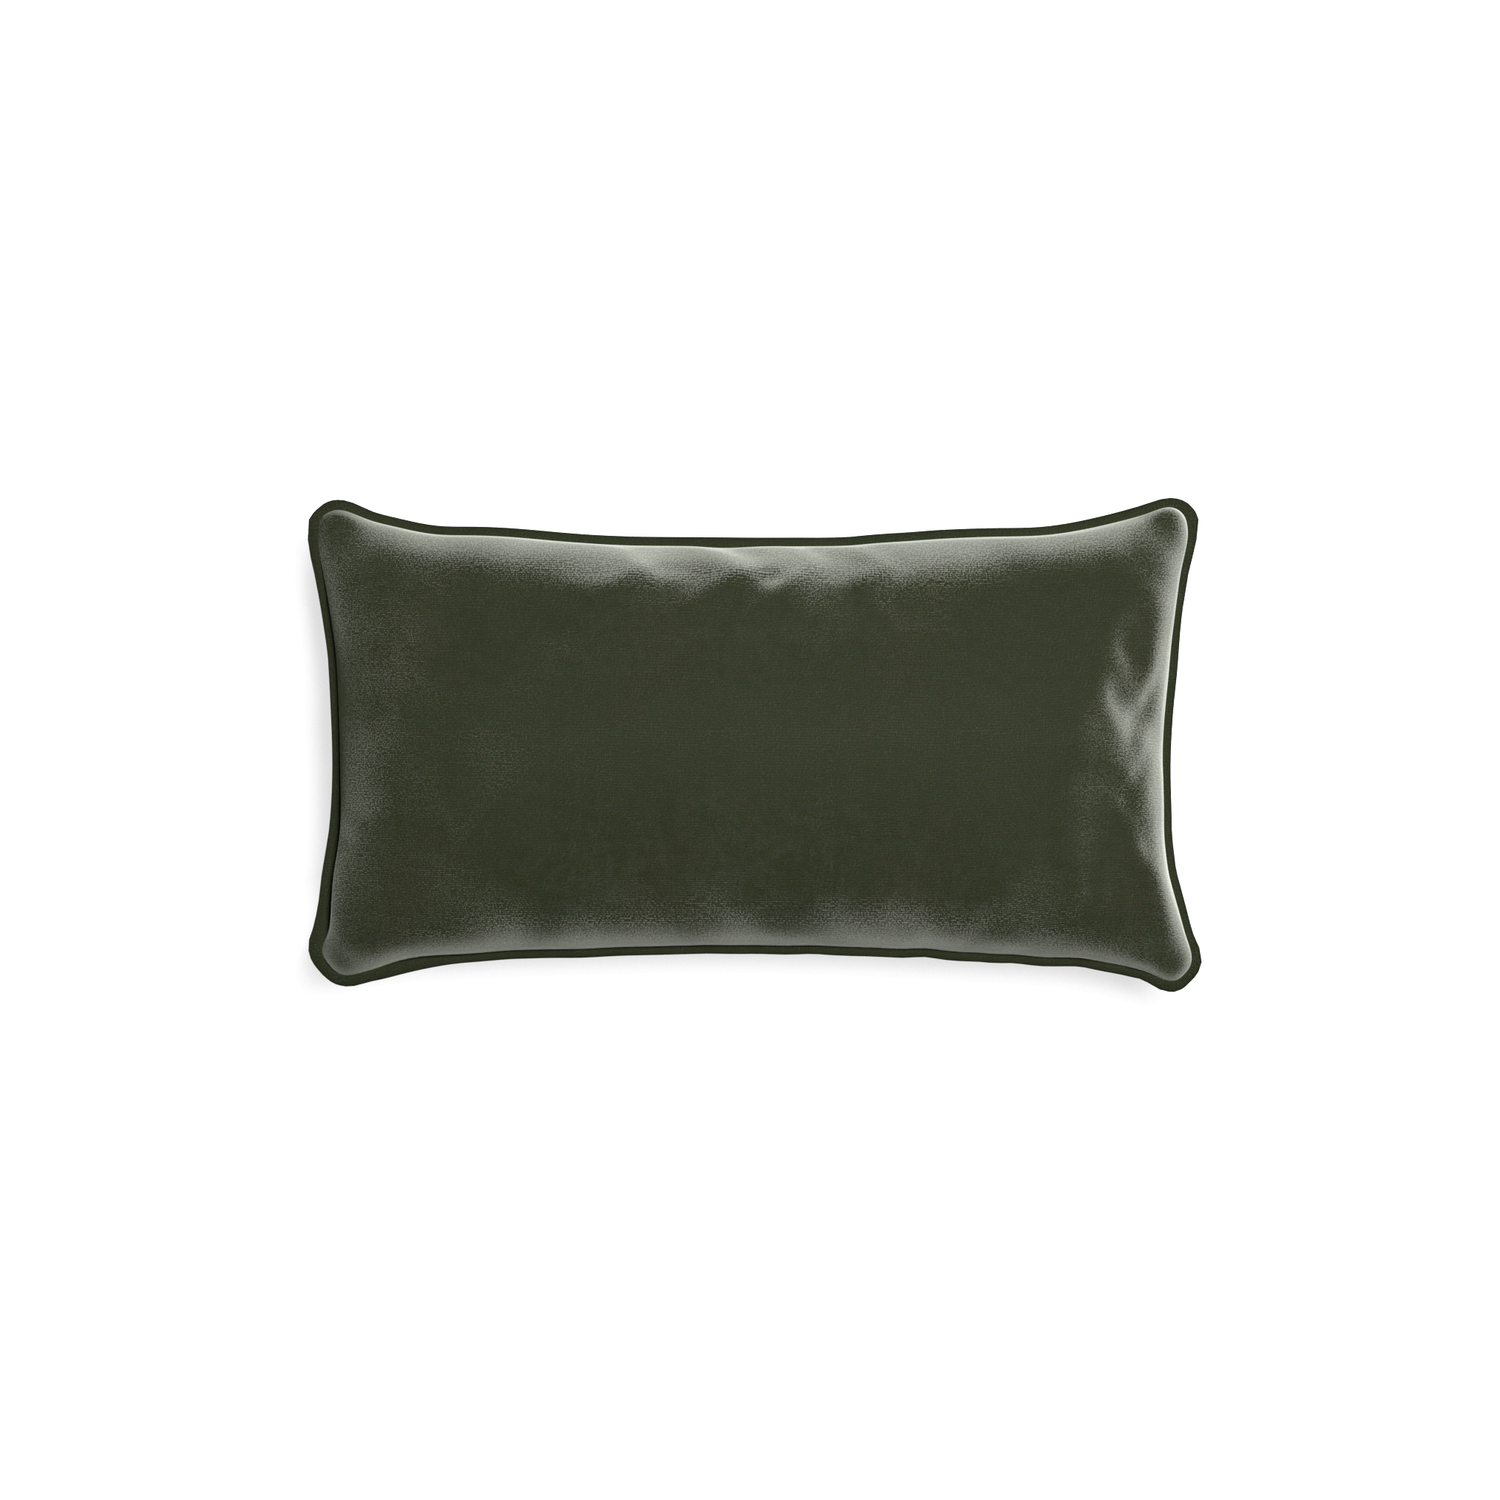 rectangle fern green velvet pillow with fern green piping